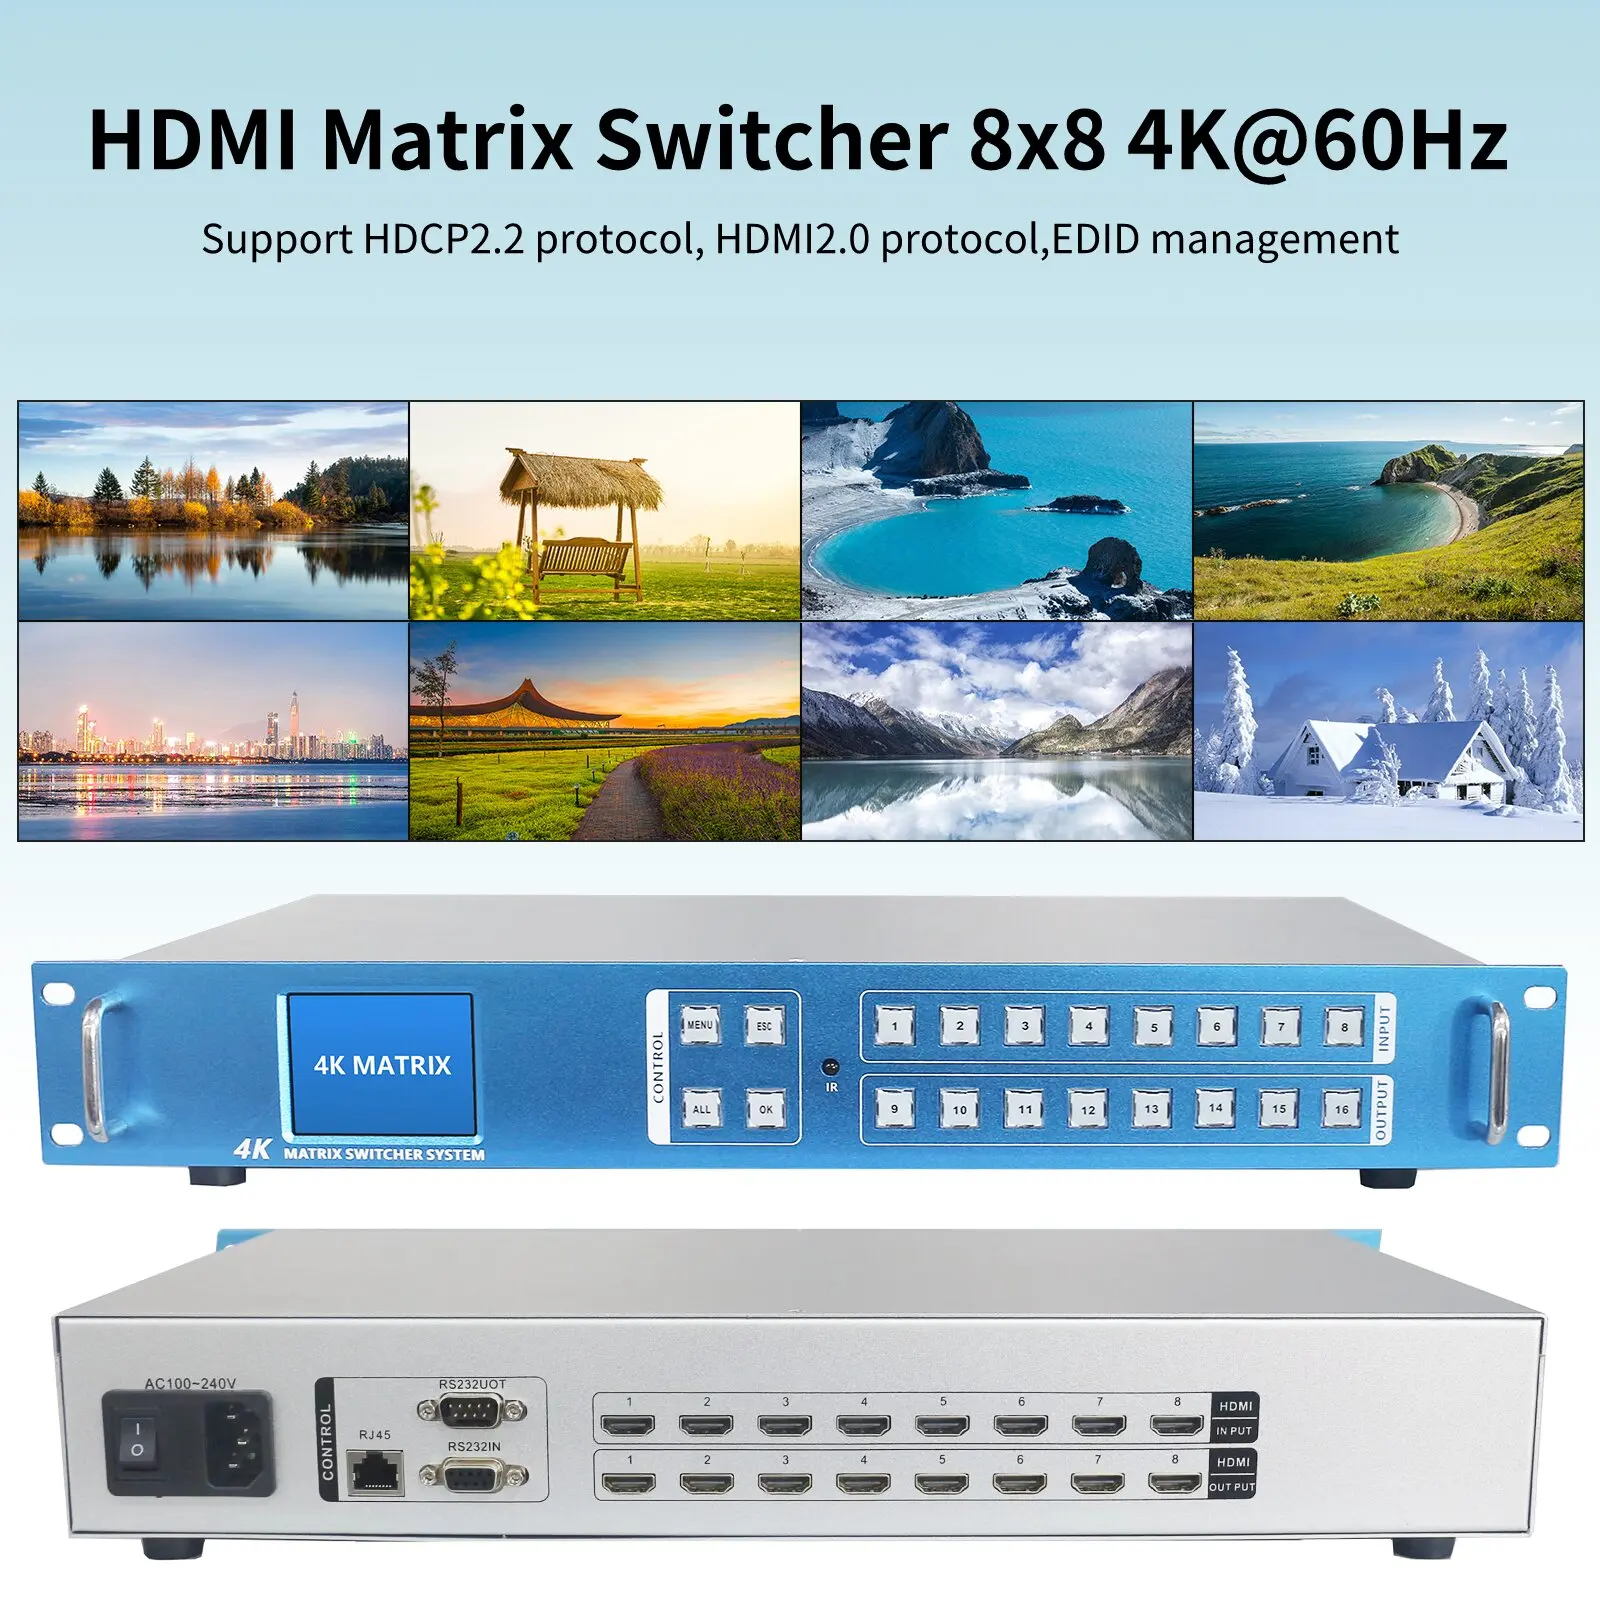 HDMI Matrix Switcher 8x8 4K60Hz Professional Rack HDMI Matrix Switch Splitter Support HDCP2.2(HDMI2.0)/EDID/RS232/TCP/IP Control